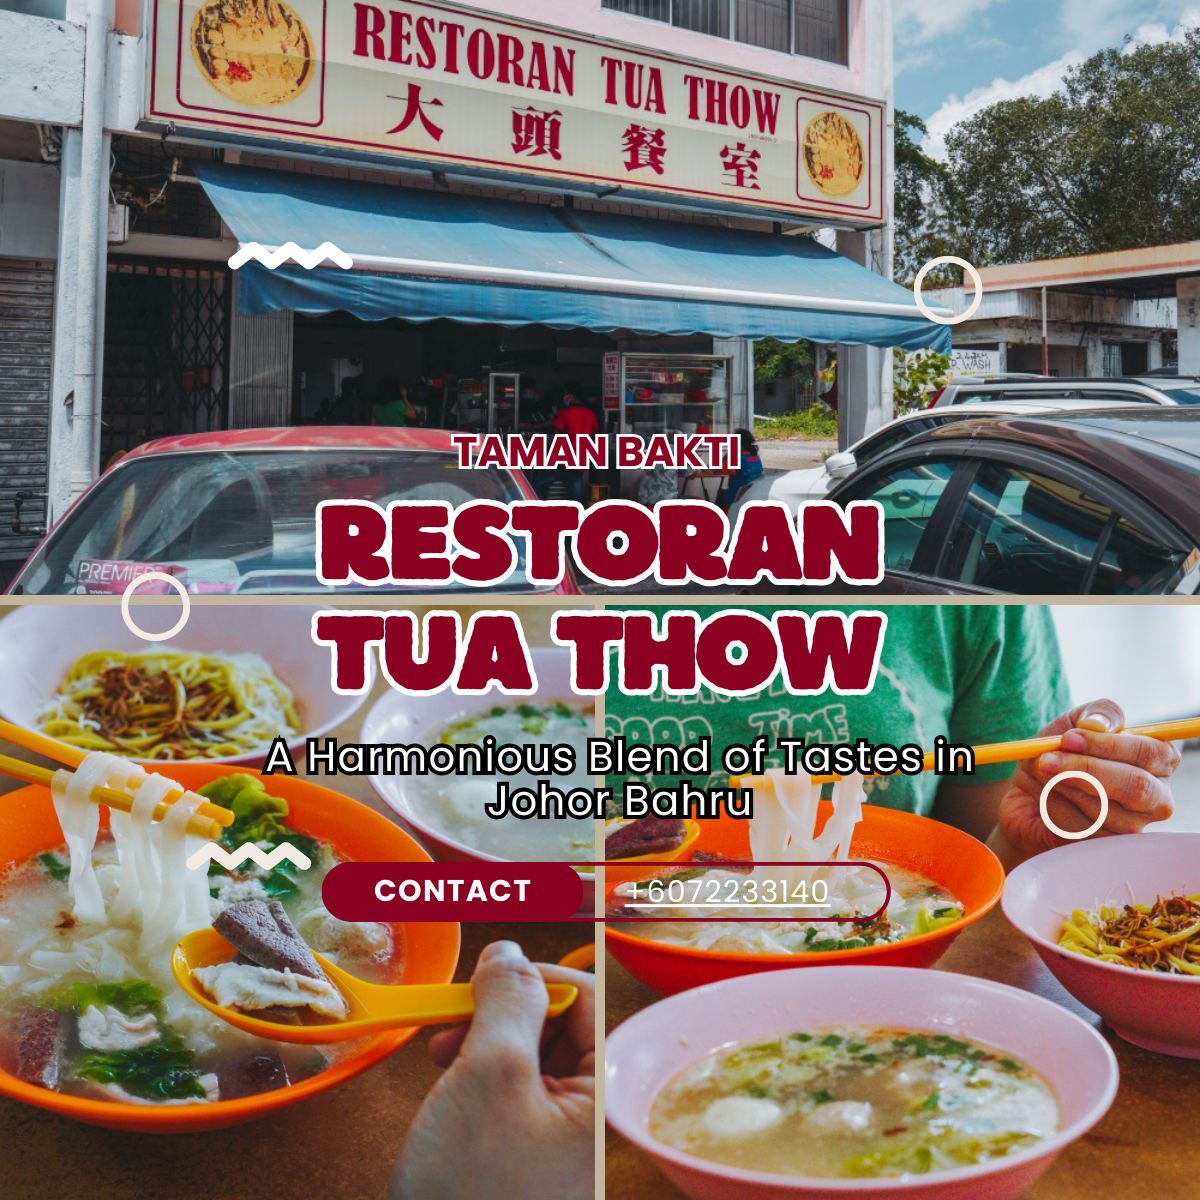 Restoran Tua Thow